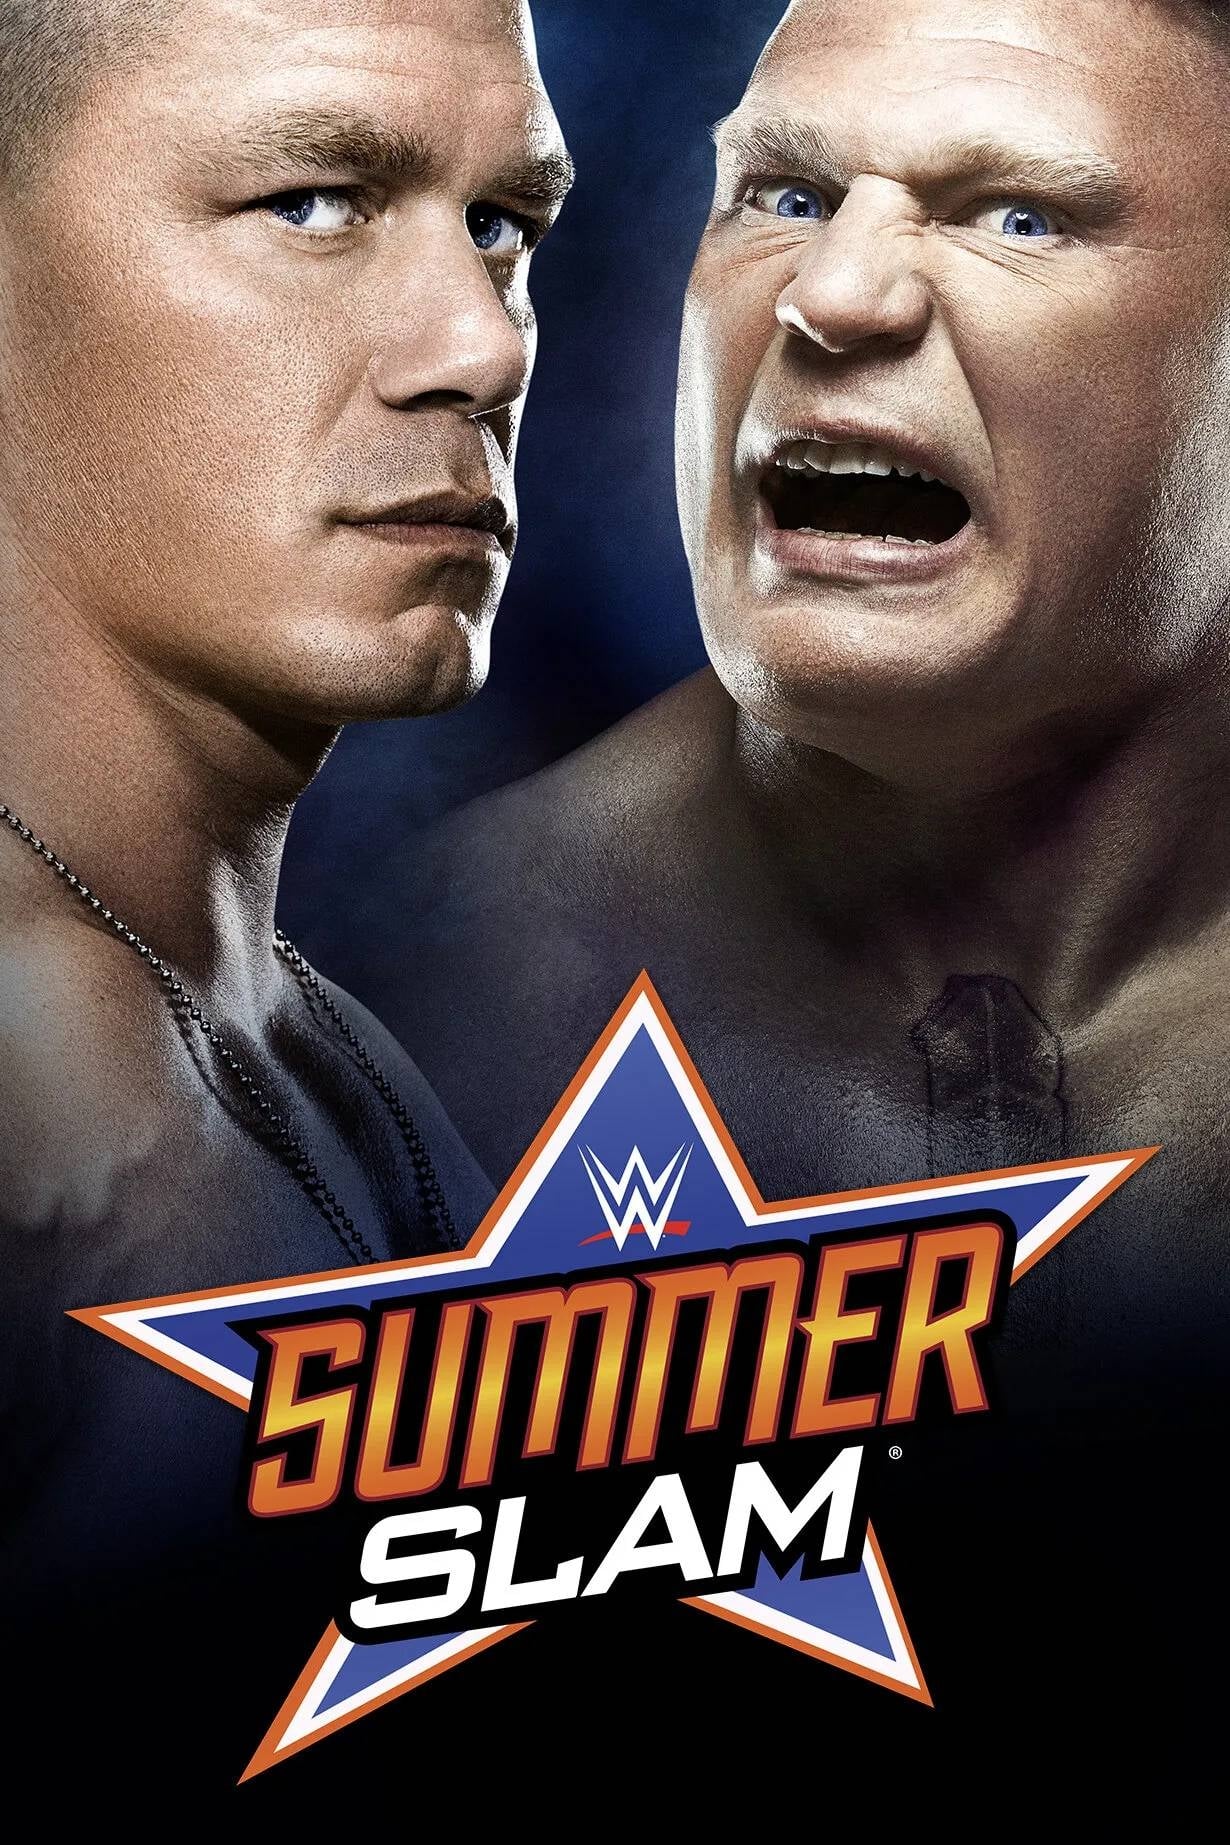 WWE SummerSlam 2014